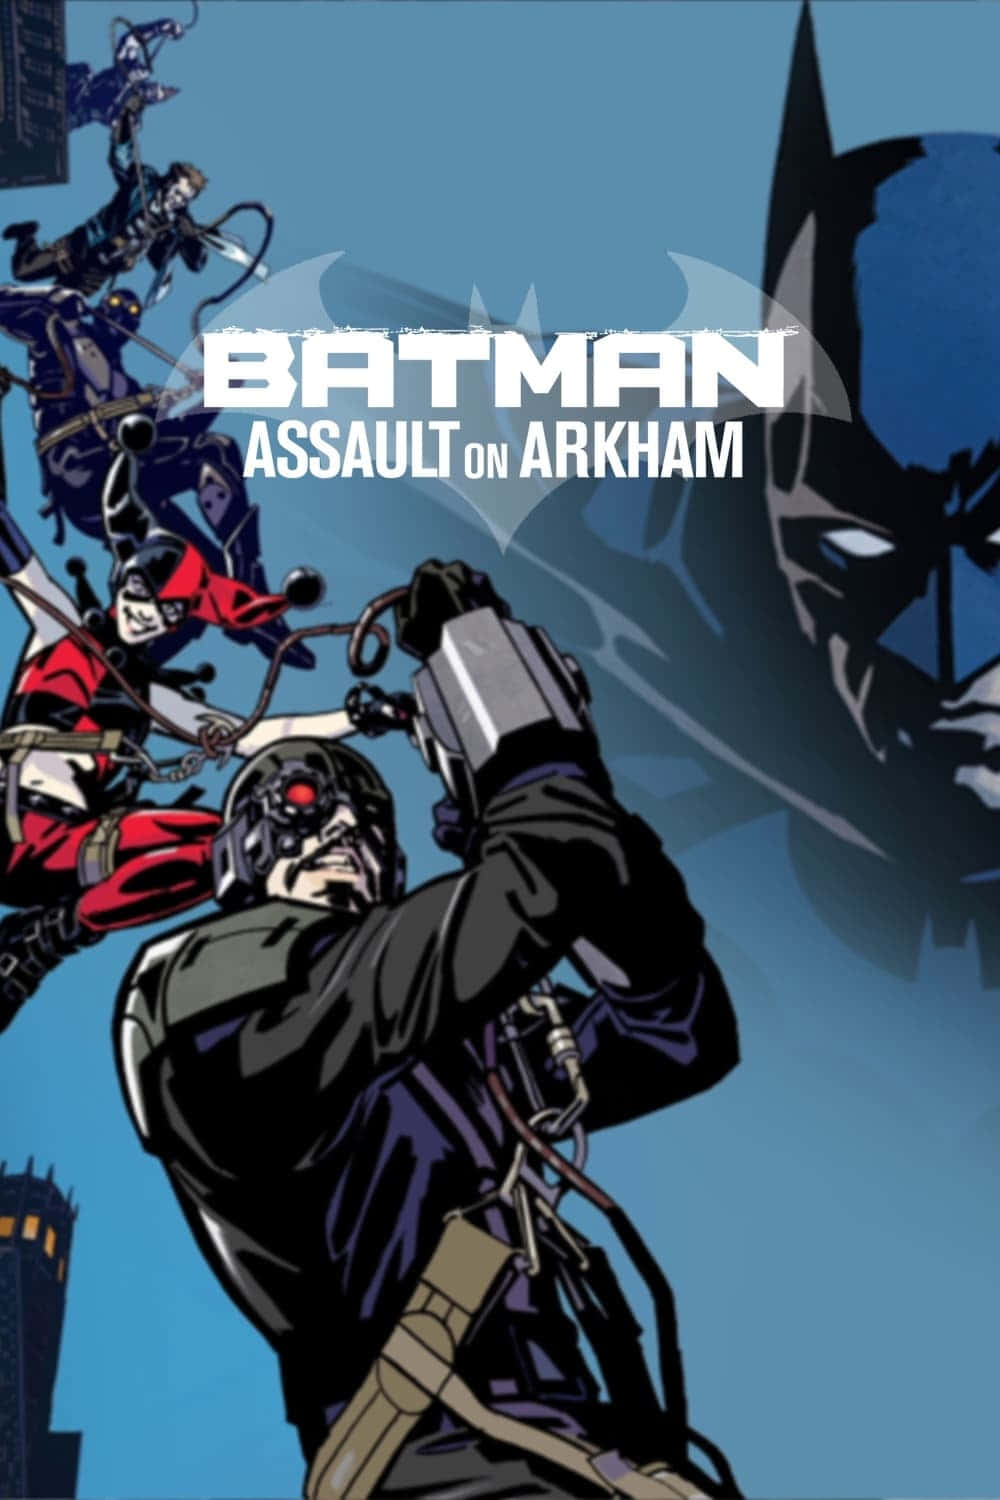 Batman and Task Force X facing off in Arkham Asylum Wallpaper